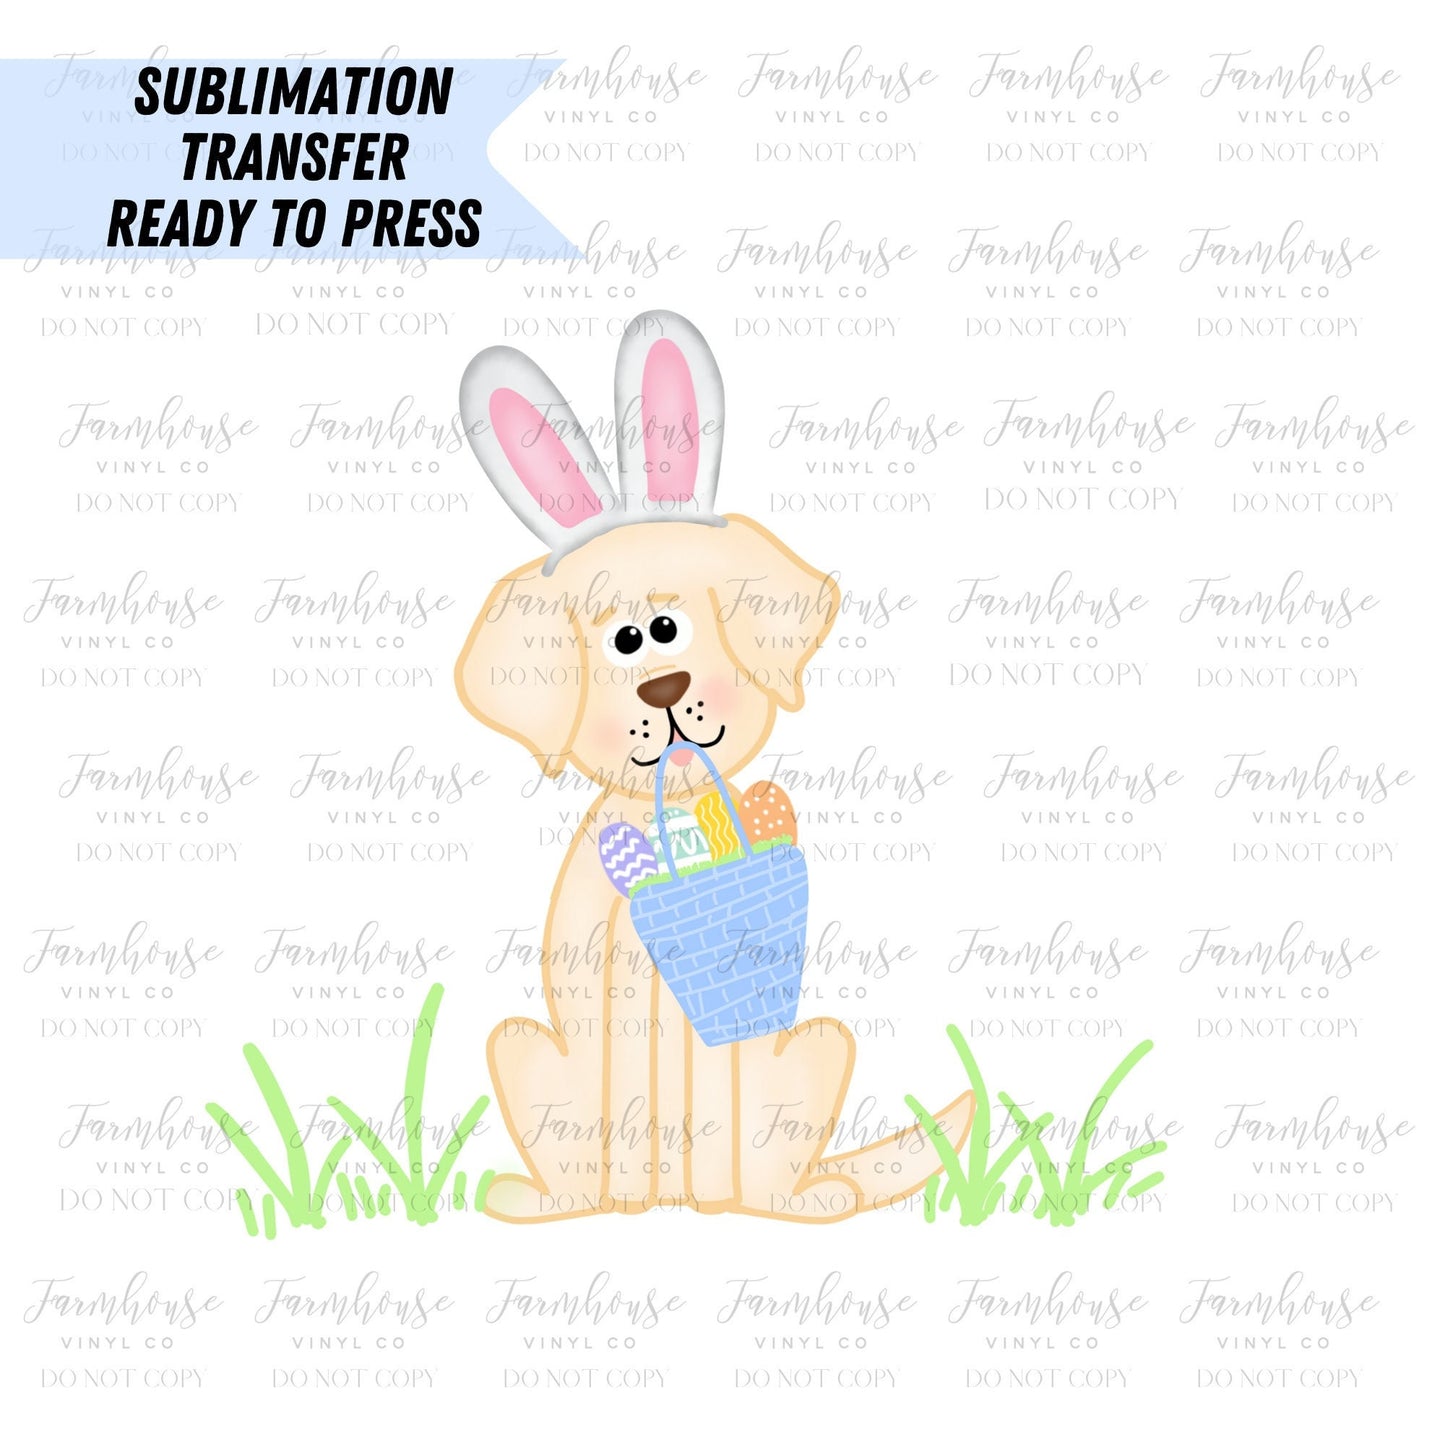 Blue Golden Dog Cute Easter Bunny Ready to Press Sublimation Transfer - Farmhouse Vinyl Co